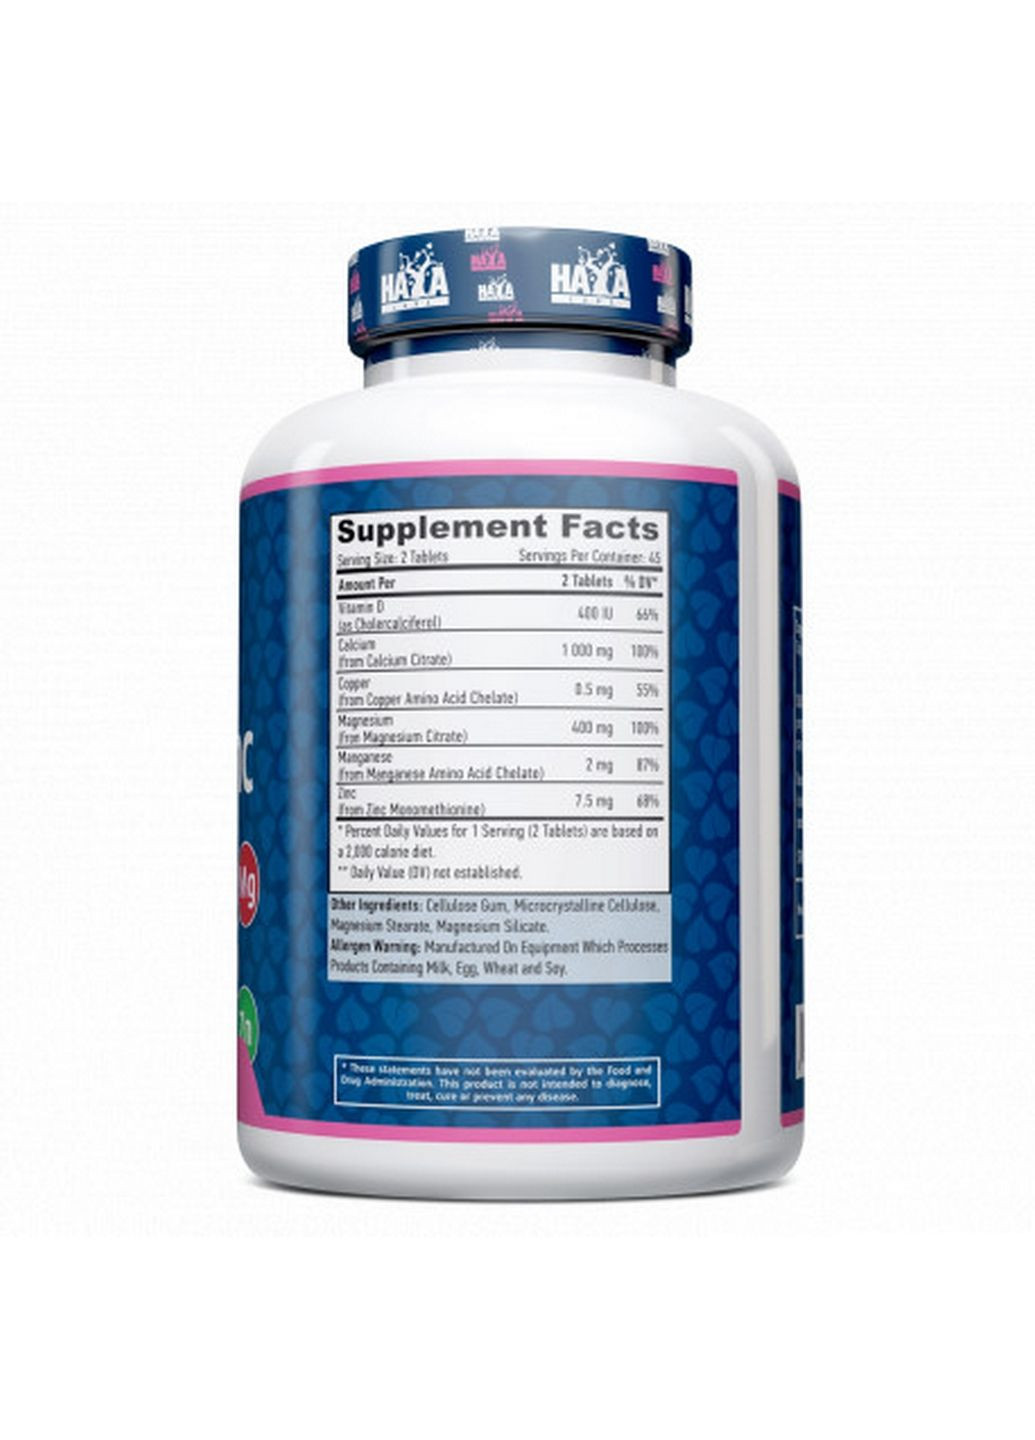 Вітаміни та мінерали Calcium Magnesium and Zinc with Vitamin D, 90 таблеток Haya Labs (293340996)